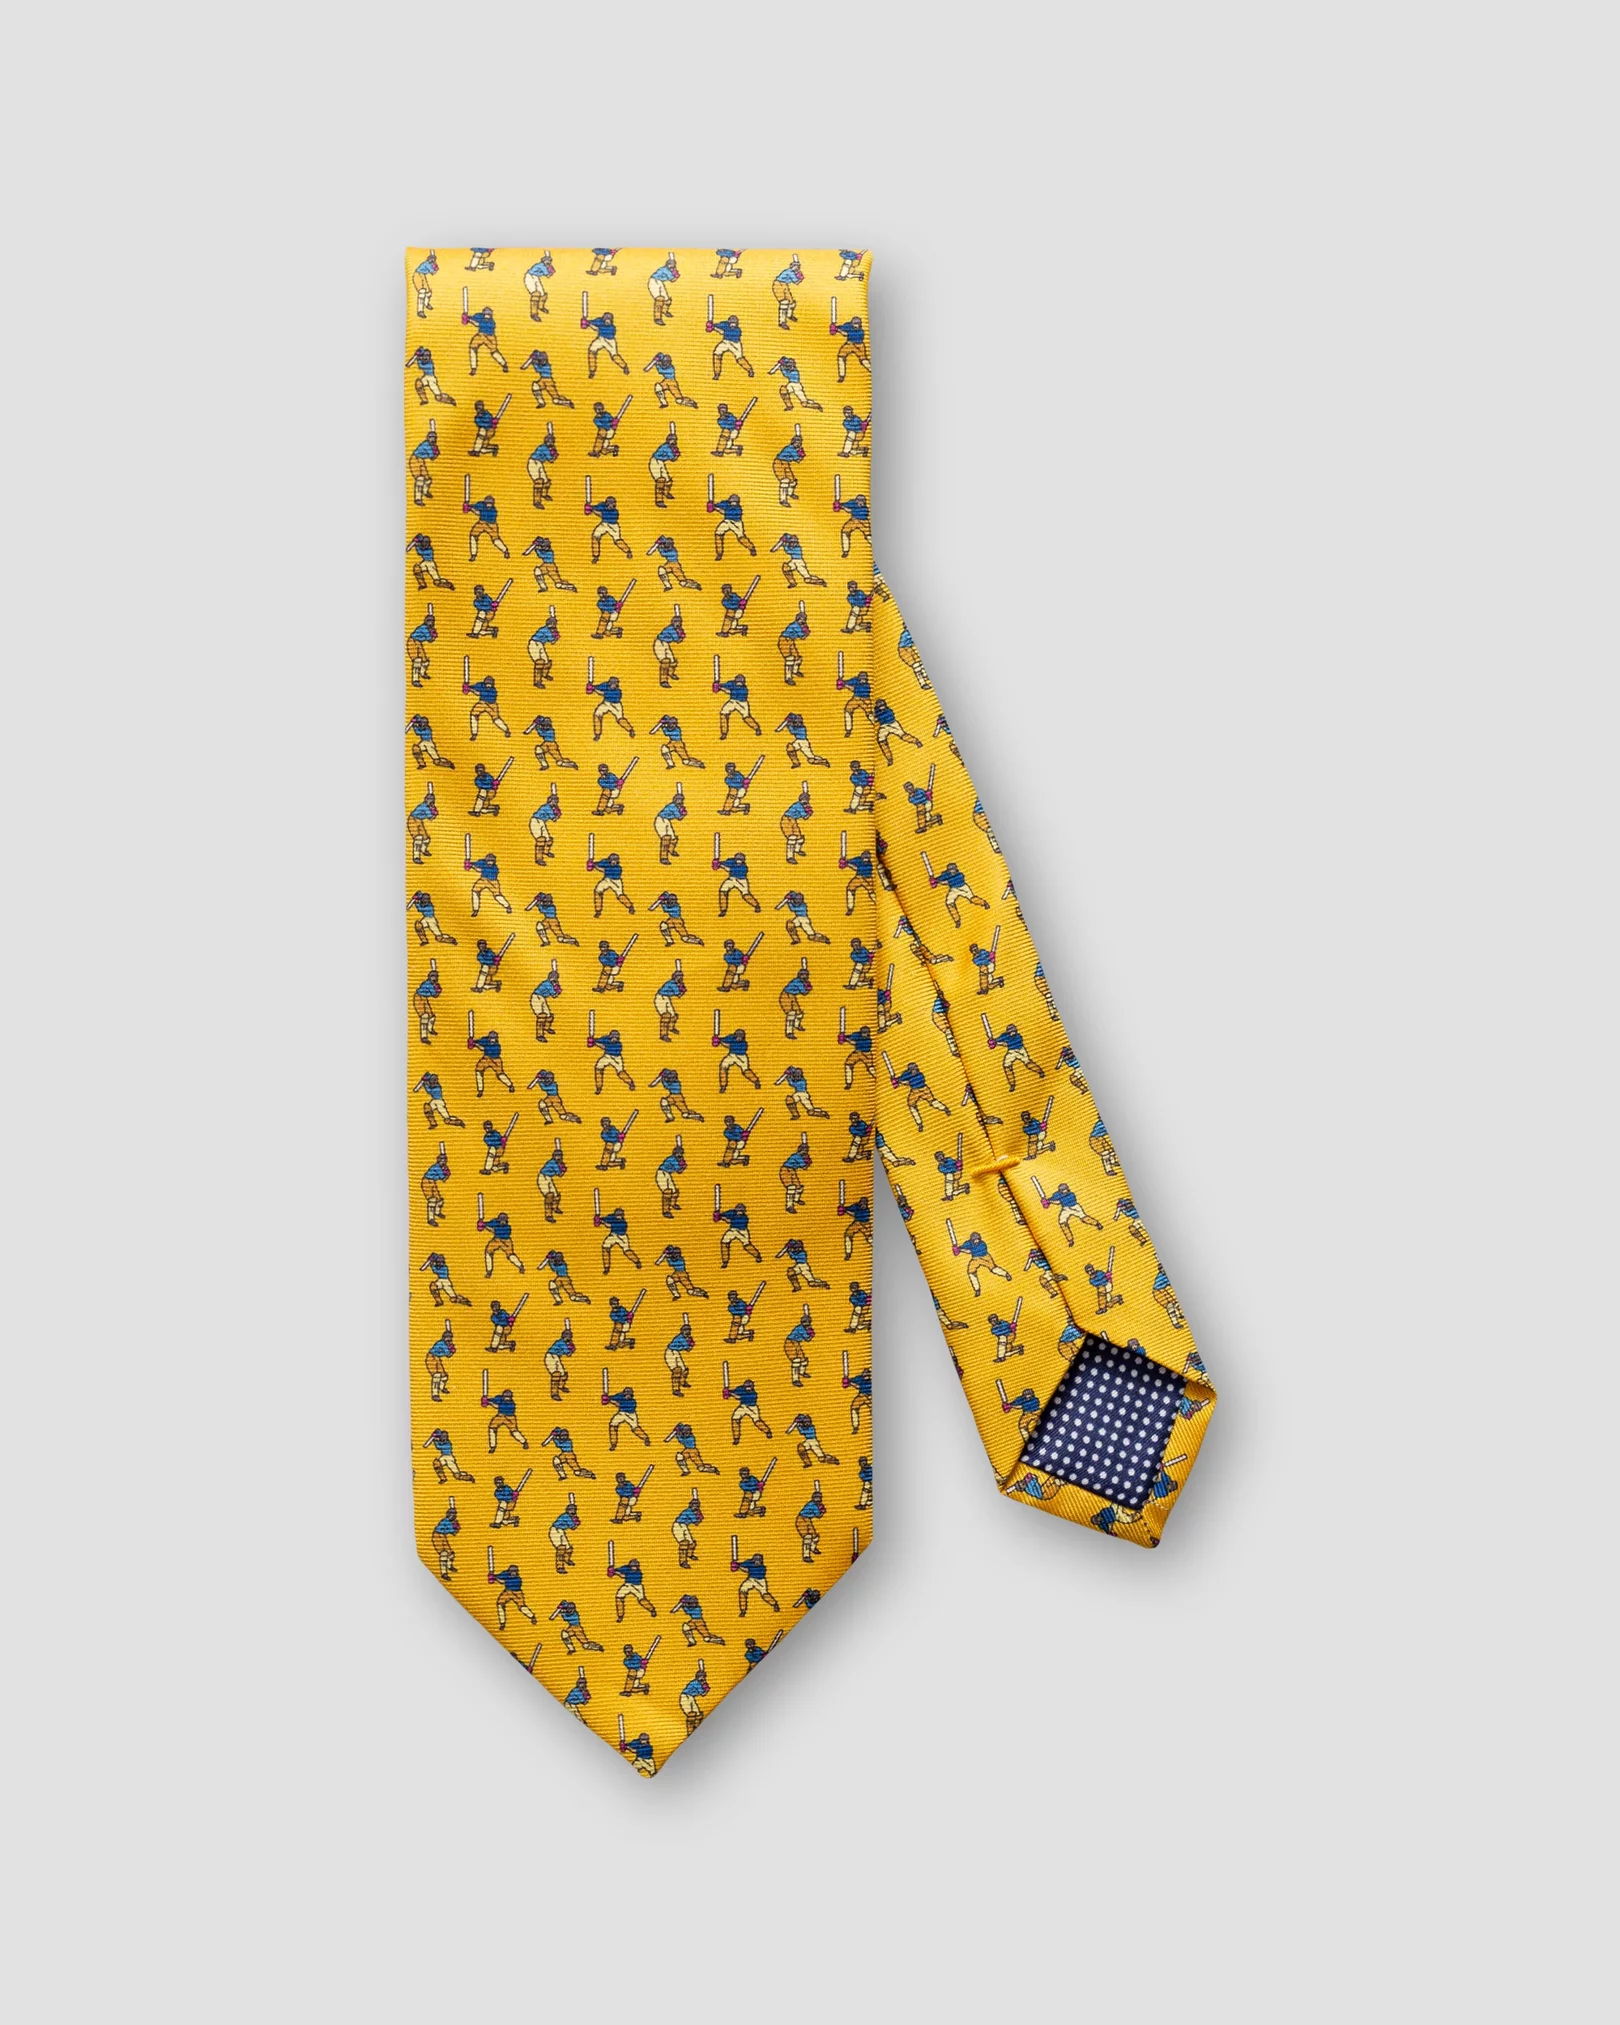 Eton - yellow cricket tie